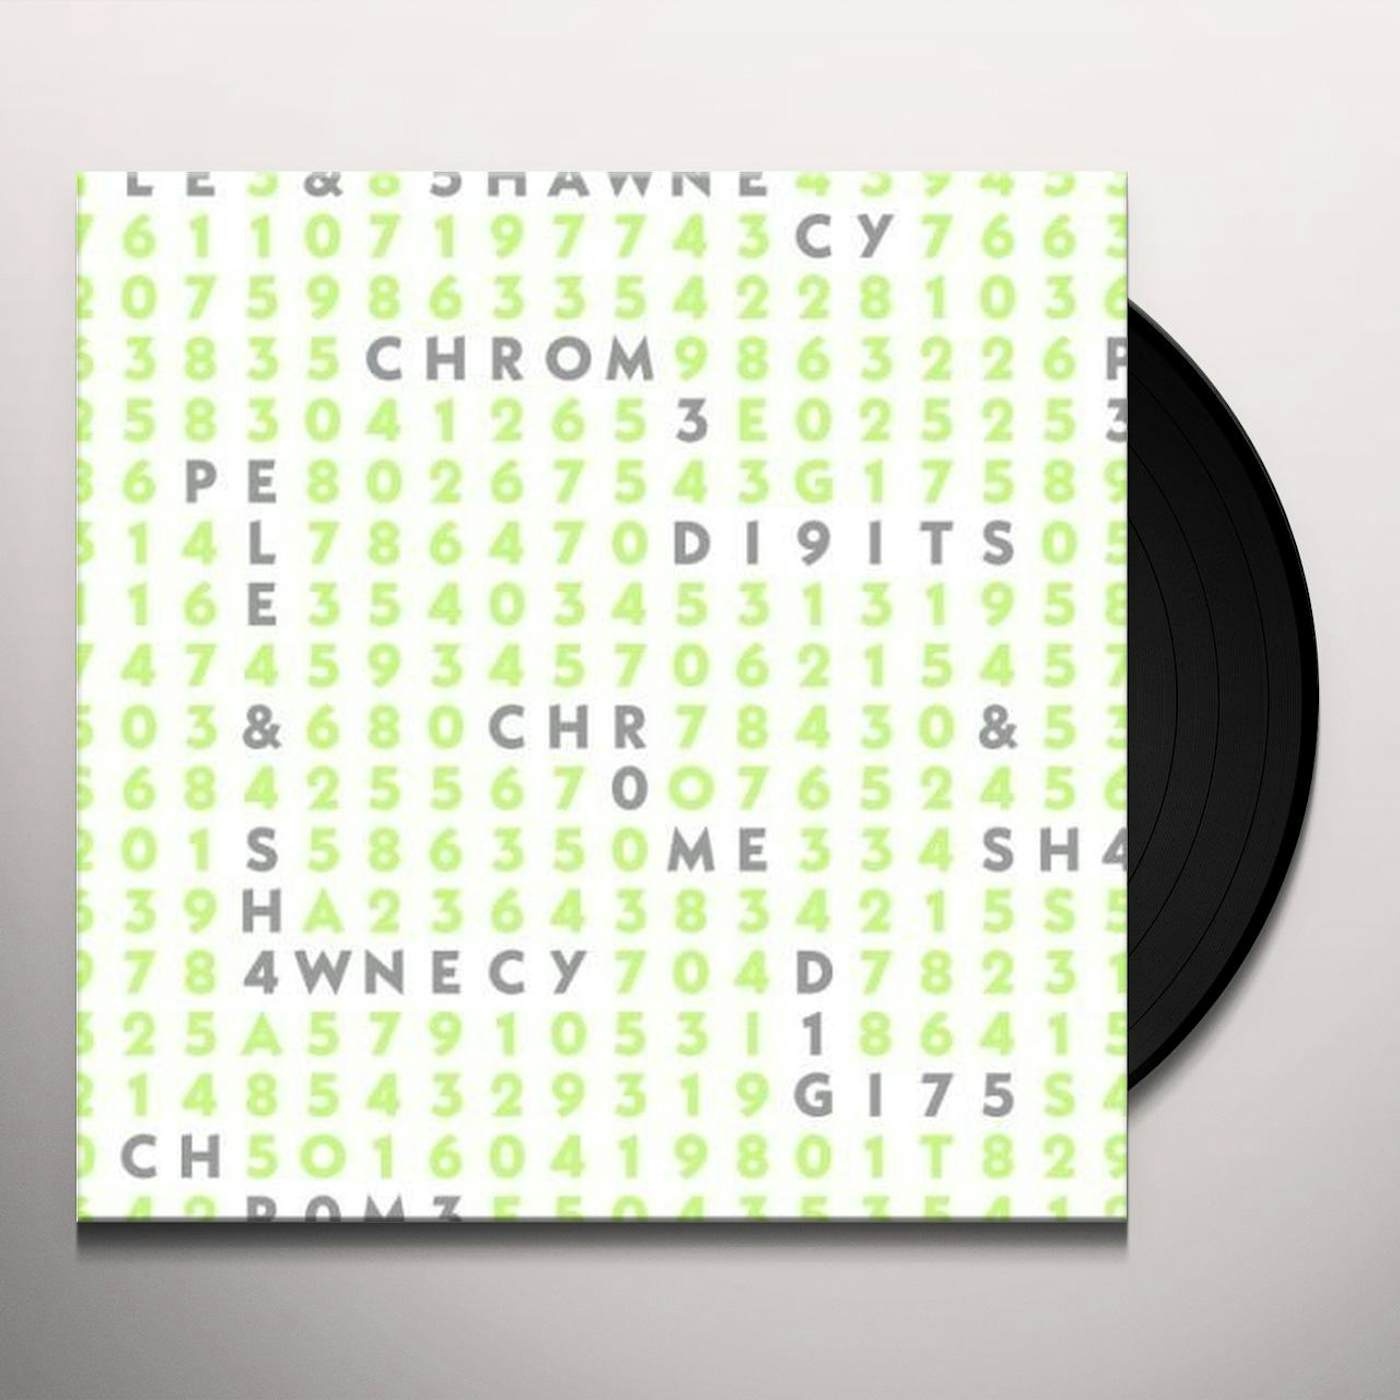 Pele & Shawnecy Chrome Digits Vinyl Record